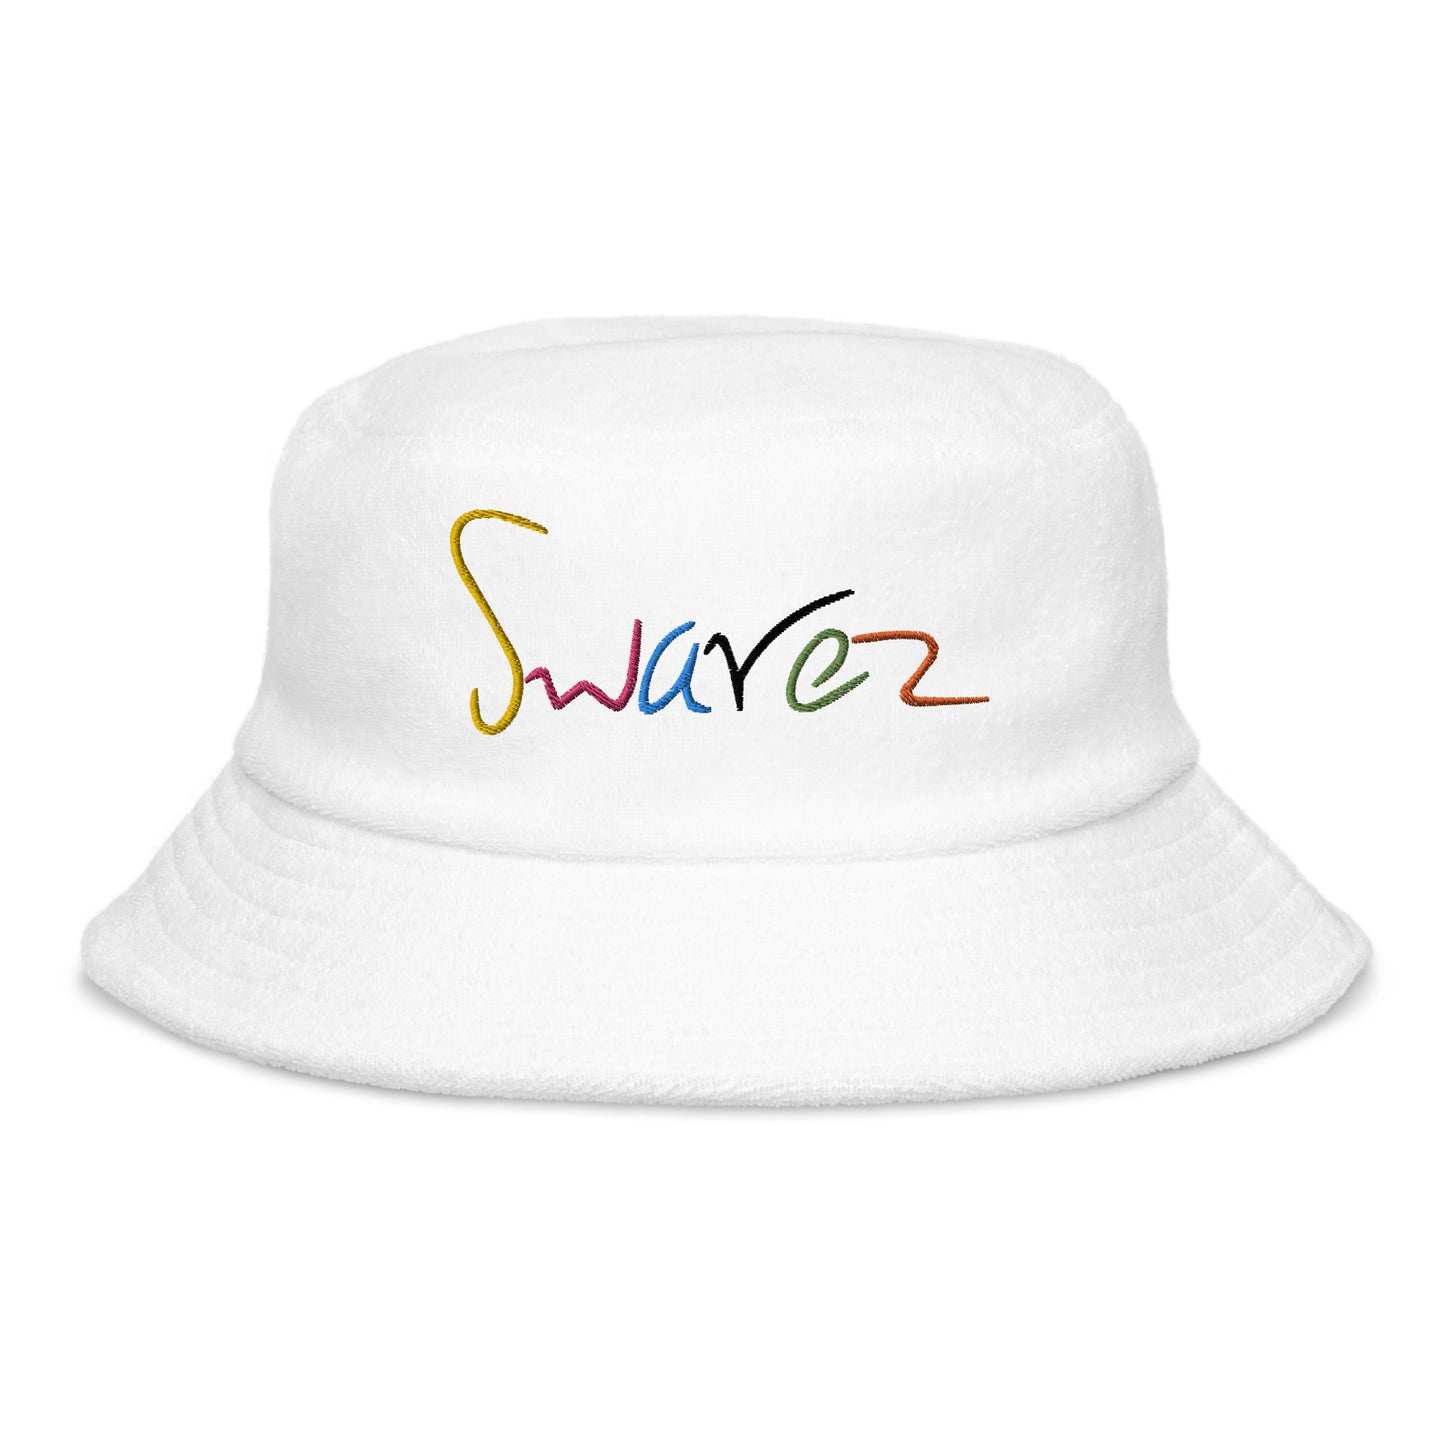 Unstructured terry cloth bucket hat - Swarez Multi Color